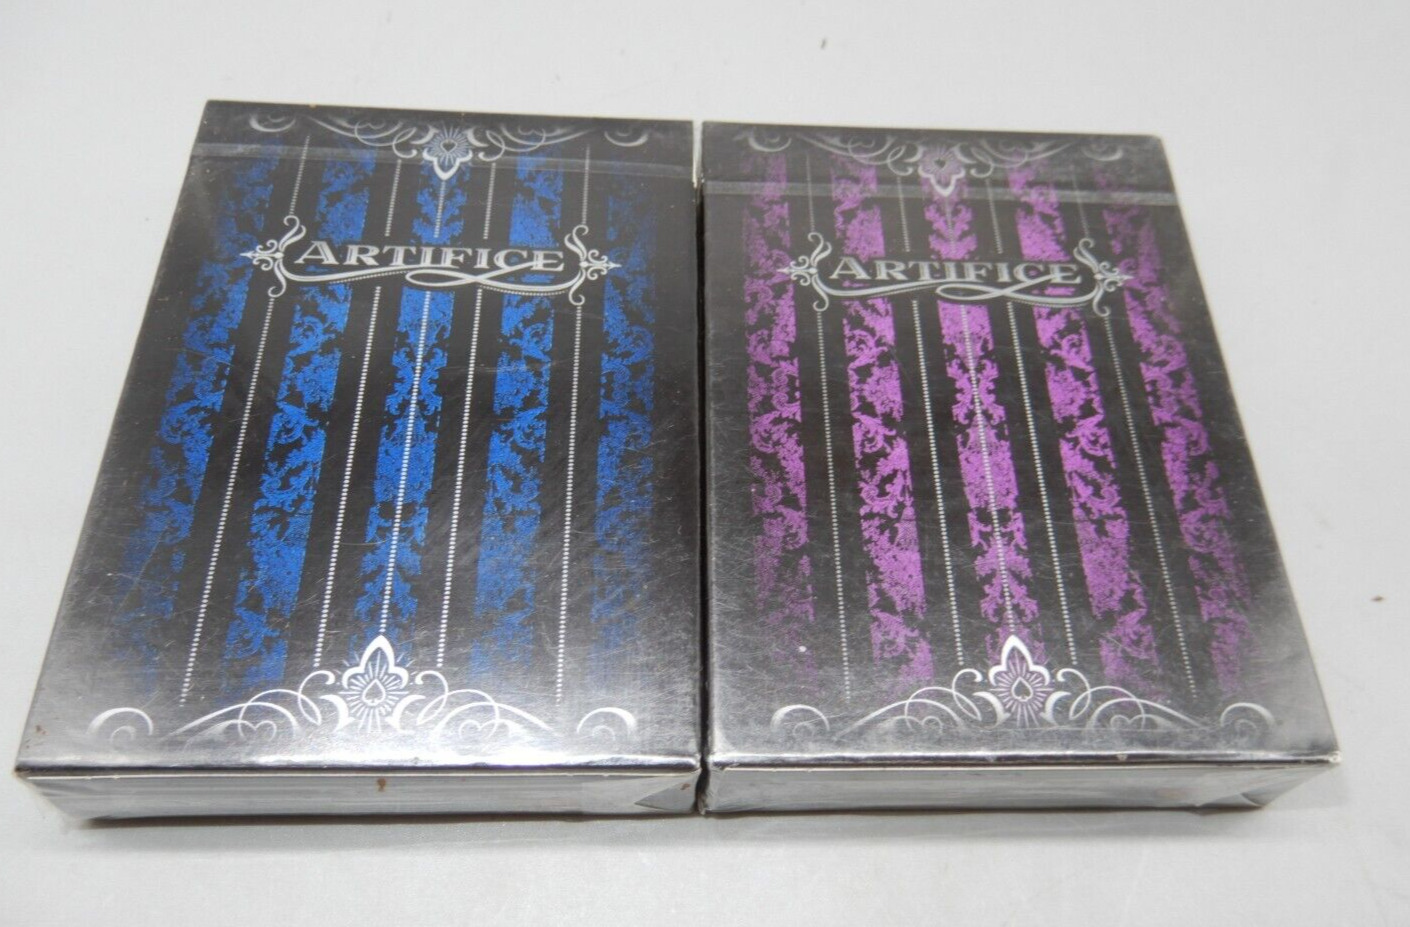 2 ARTIFICE Ellusionist Playing Card decks PURPLE & BLUE NEW/SEALED pair 2011